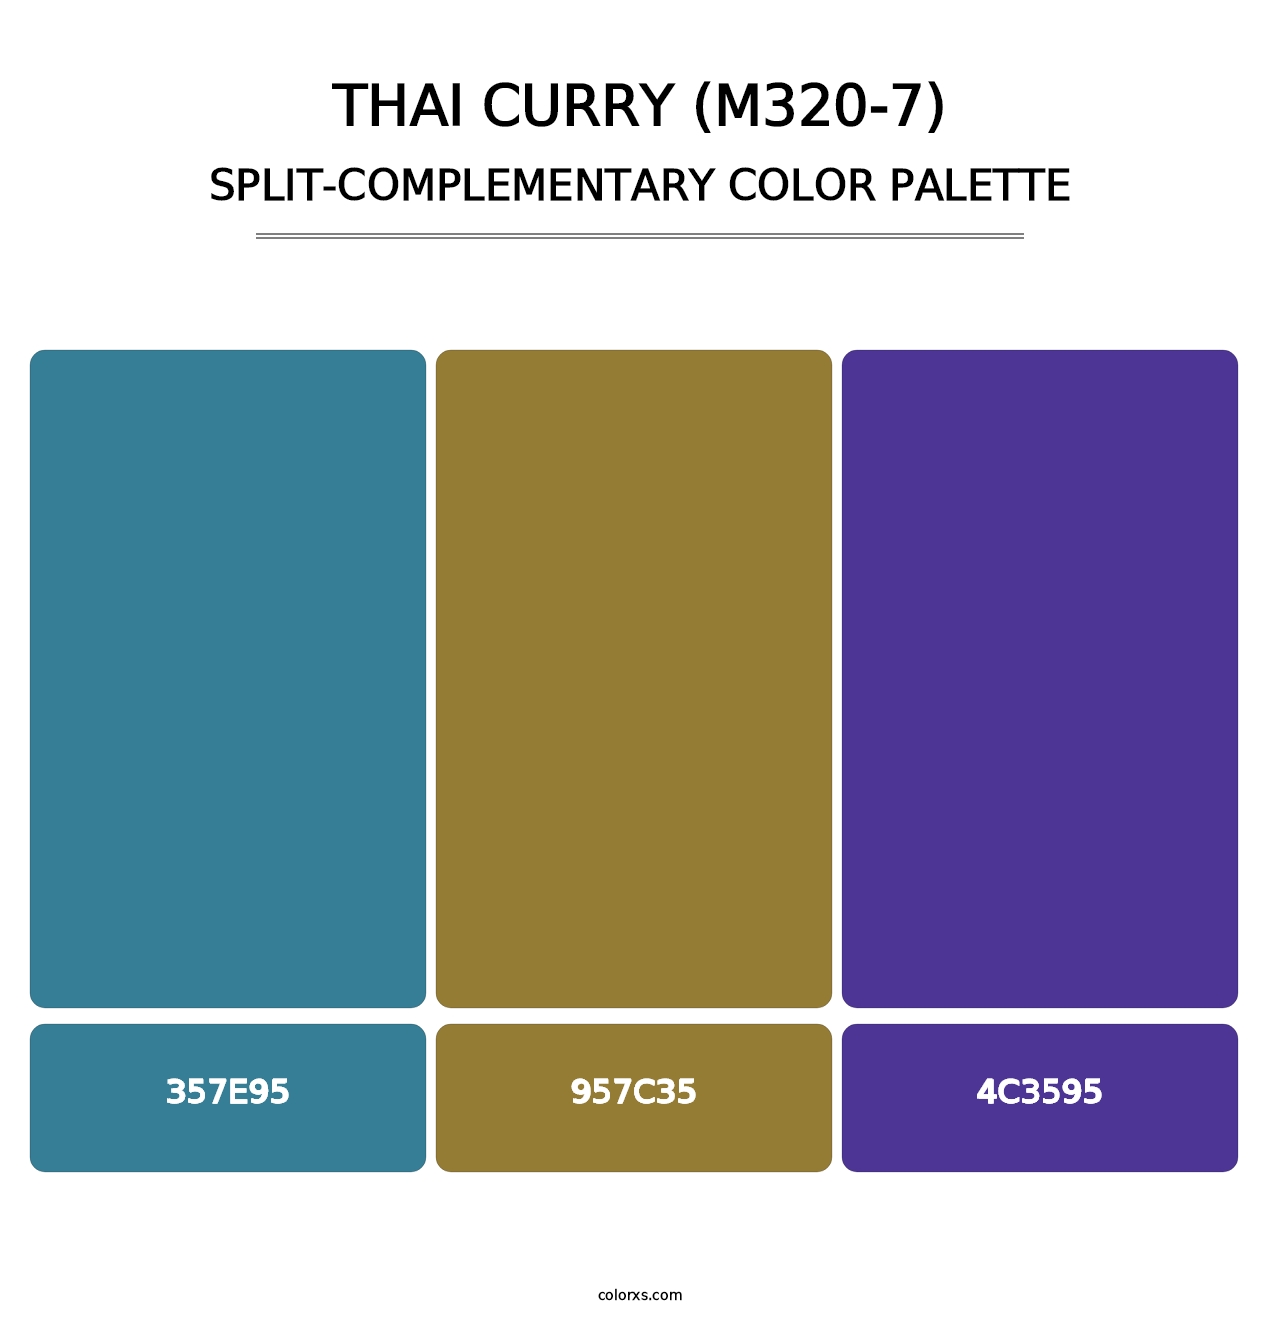 Thai Curry (M320-7) - Split-Complementary Color Palette